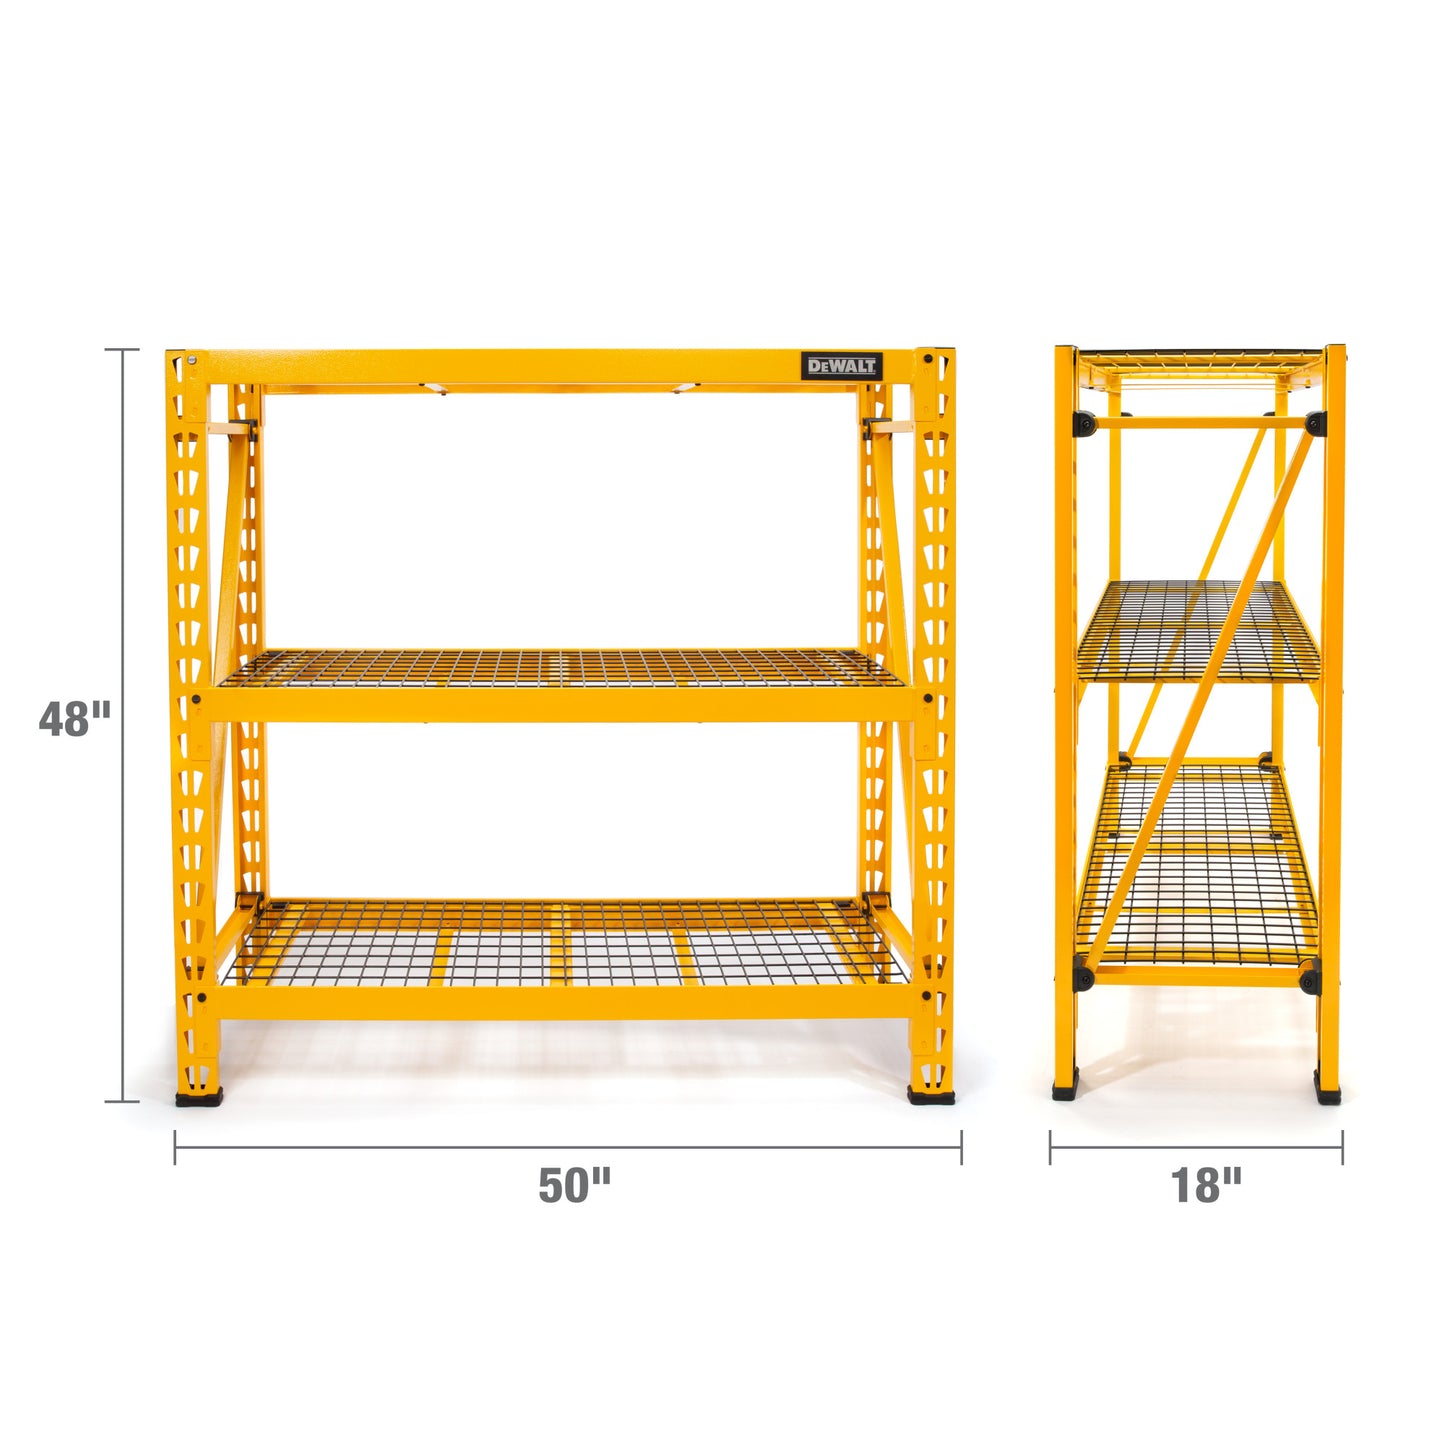 48 in. H x 50 in. W x 18 in. D 3-Shelf Wire Deck Industrial Storage Rack